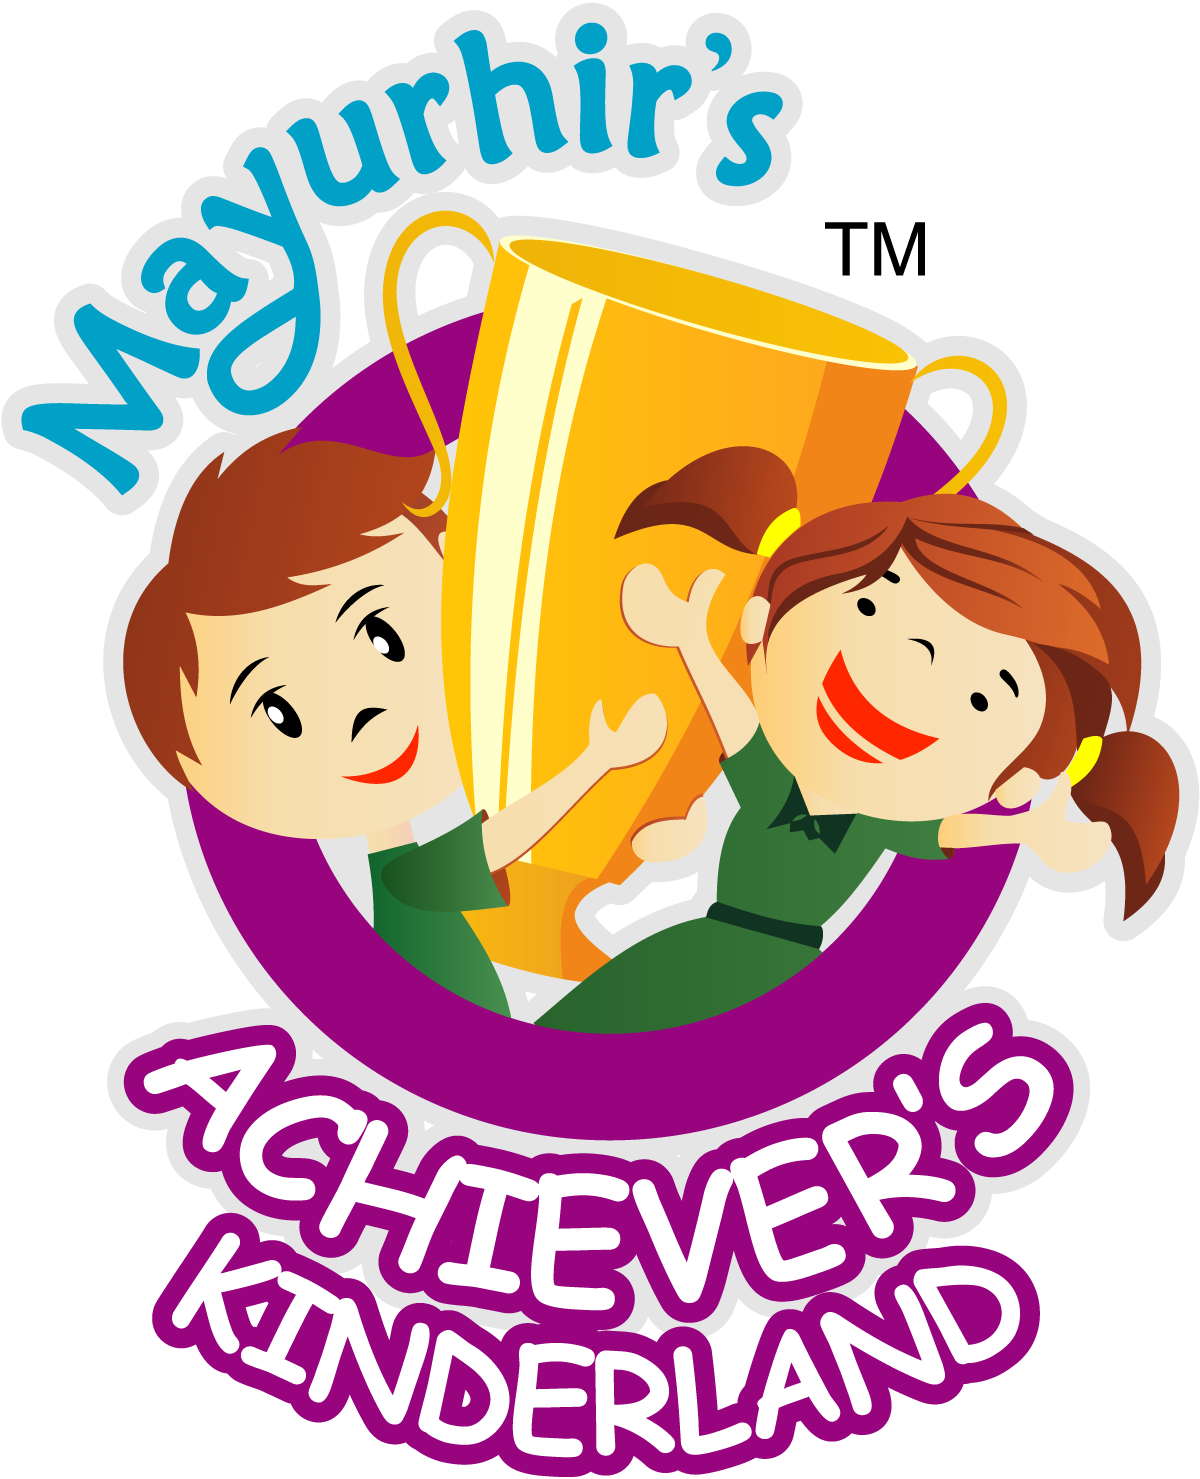 Mayurhir's Achievers Kinderland logo